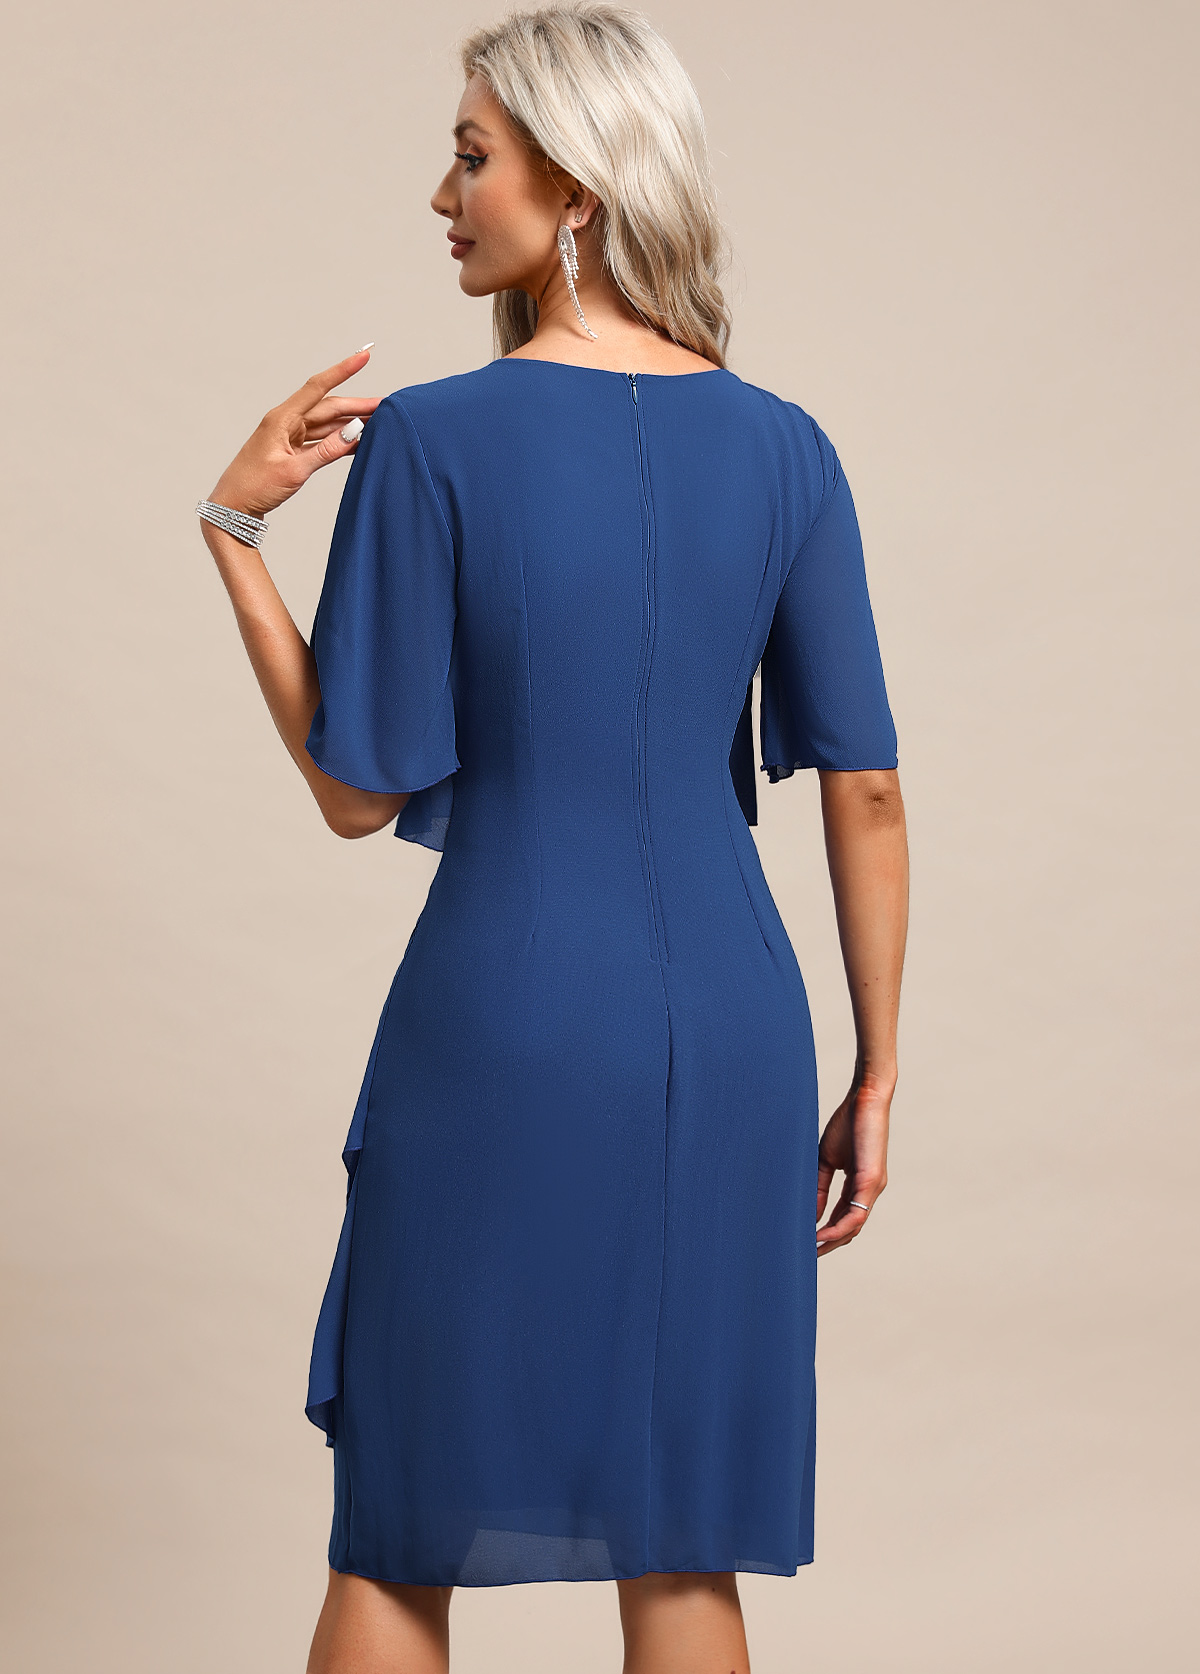 Blue Breathable Half Sleeve Scoop Neck Shift Dress